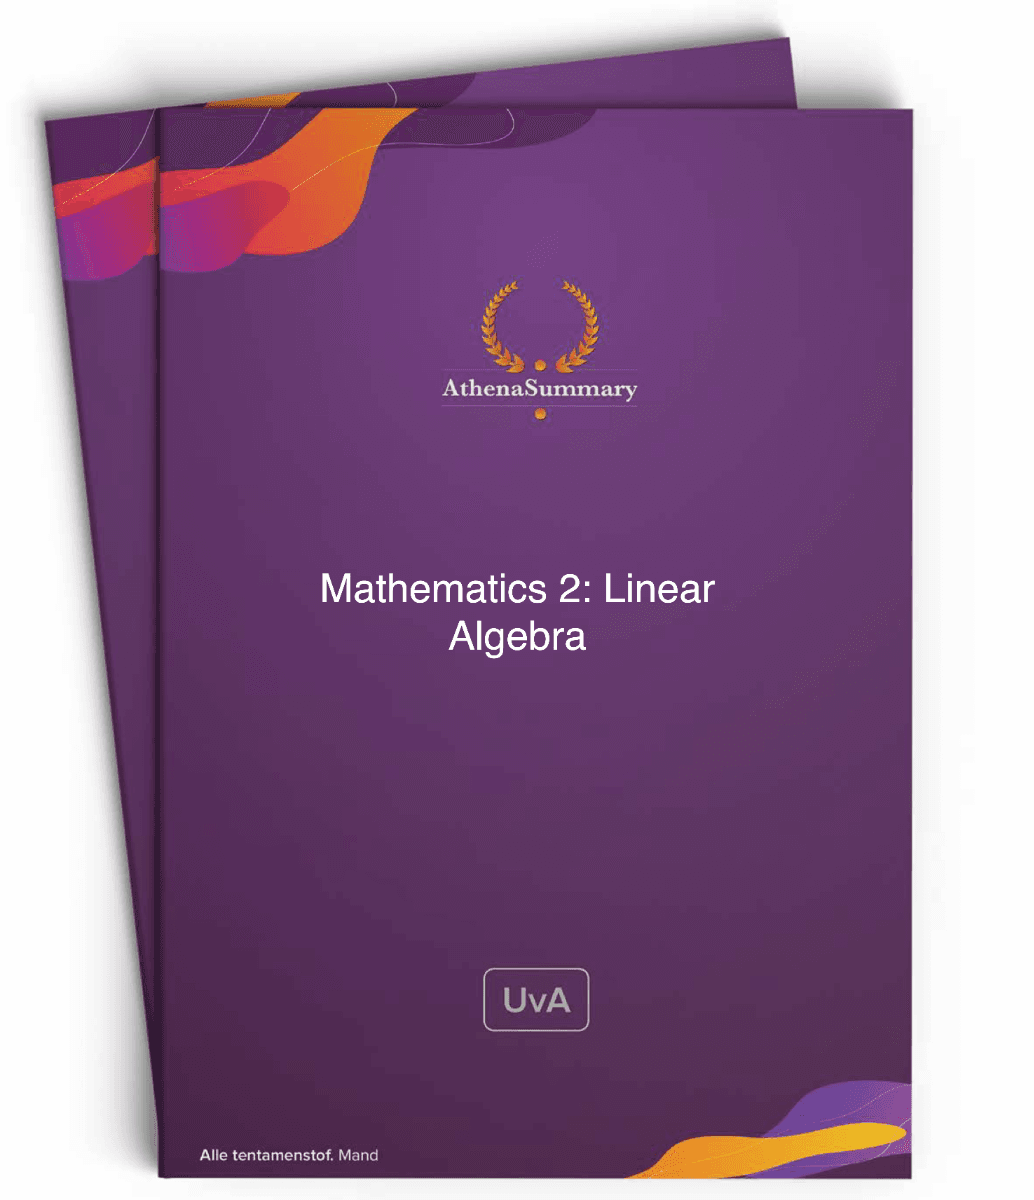 Literature Summary: Mathematics 2 - Linear Algebra